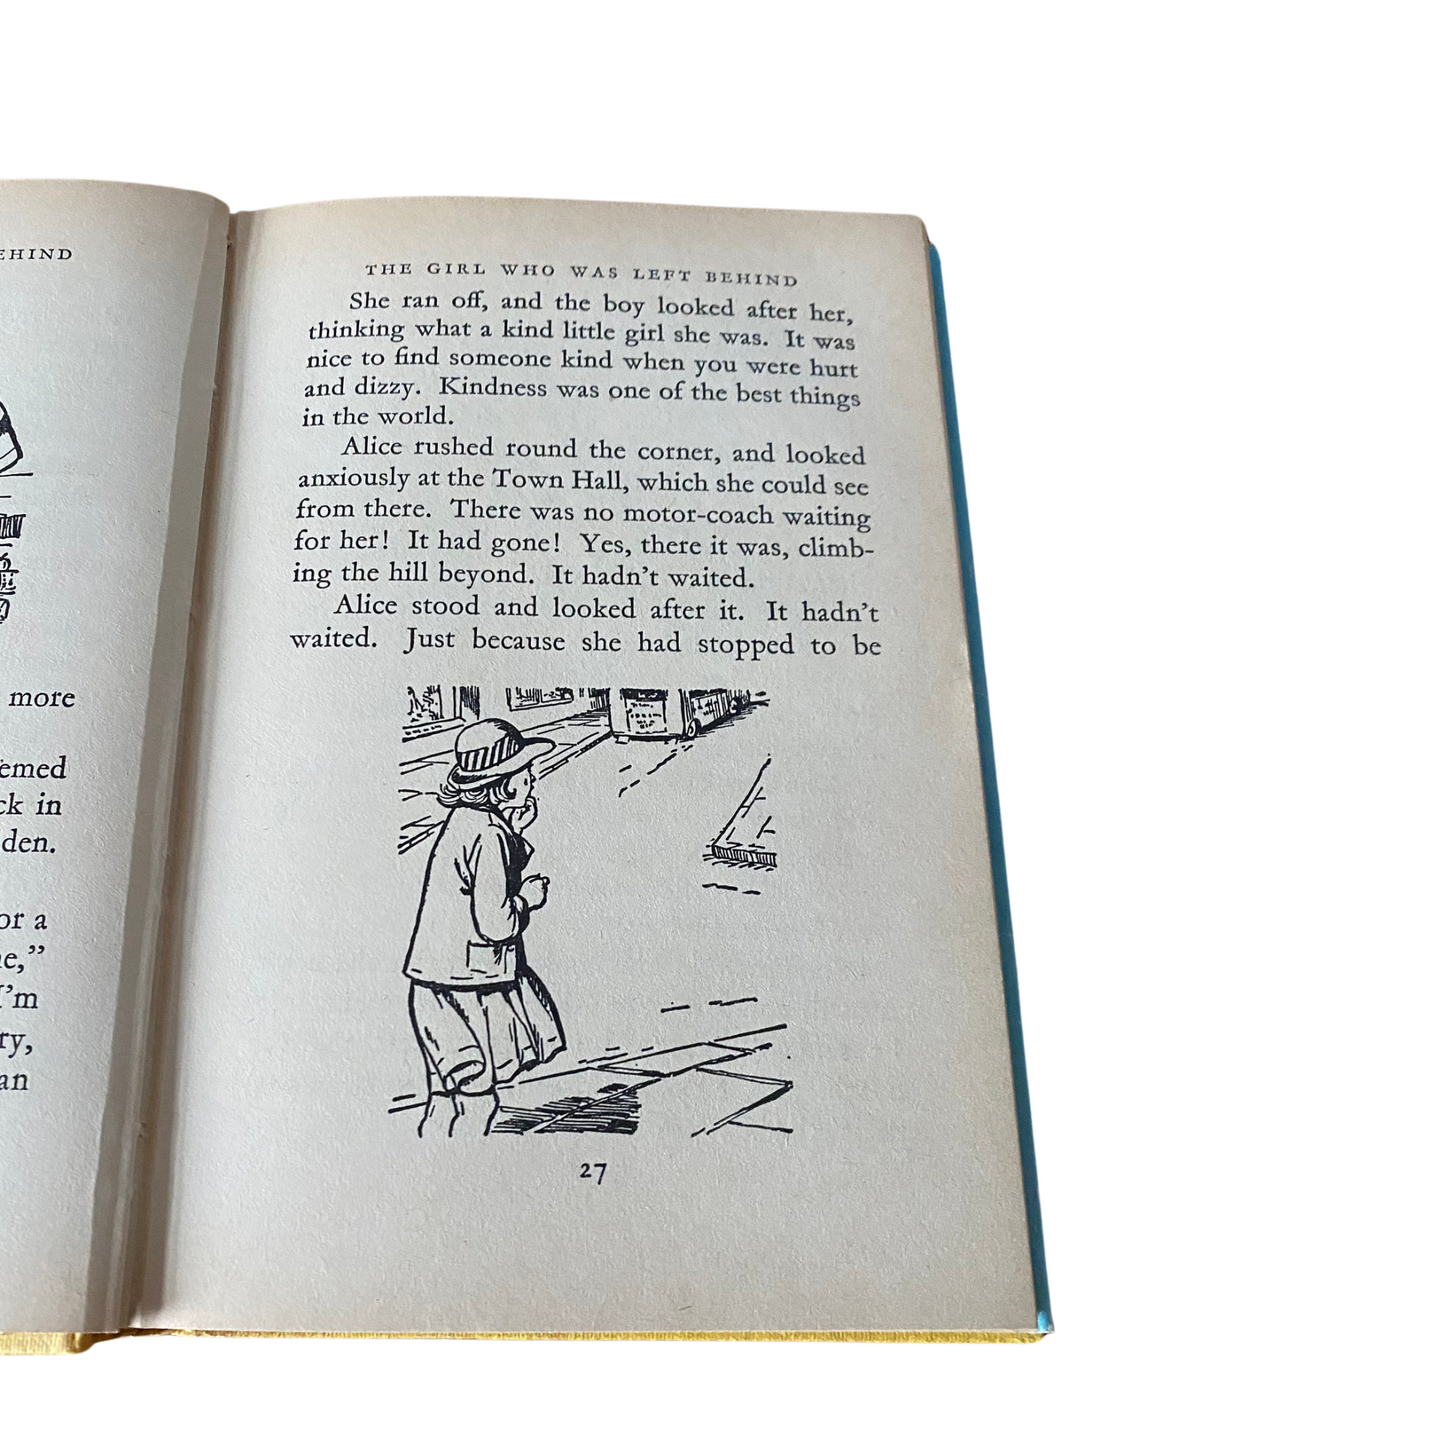 Enid Blyton’s Stories for Bedtime . 60s vintage Dean & son hardback book with dust jacket. Great nostalgic/ children’s gift idea